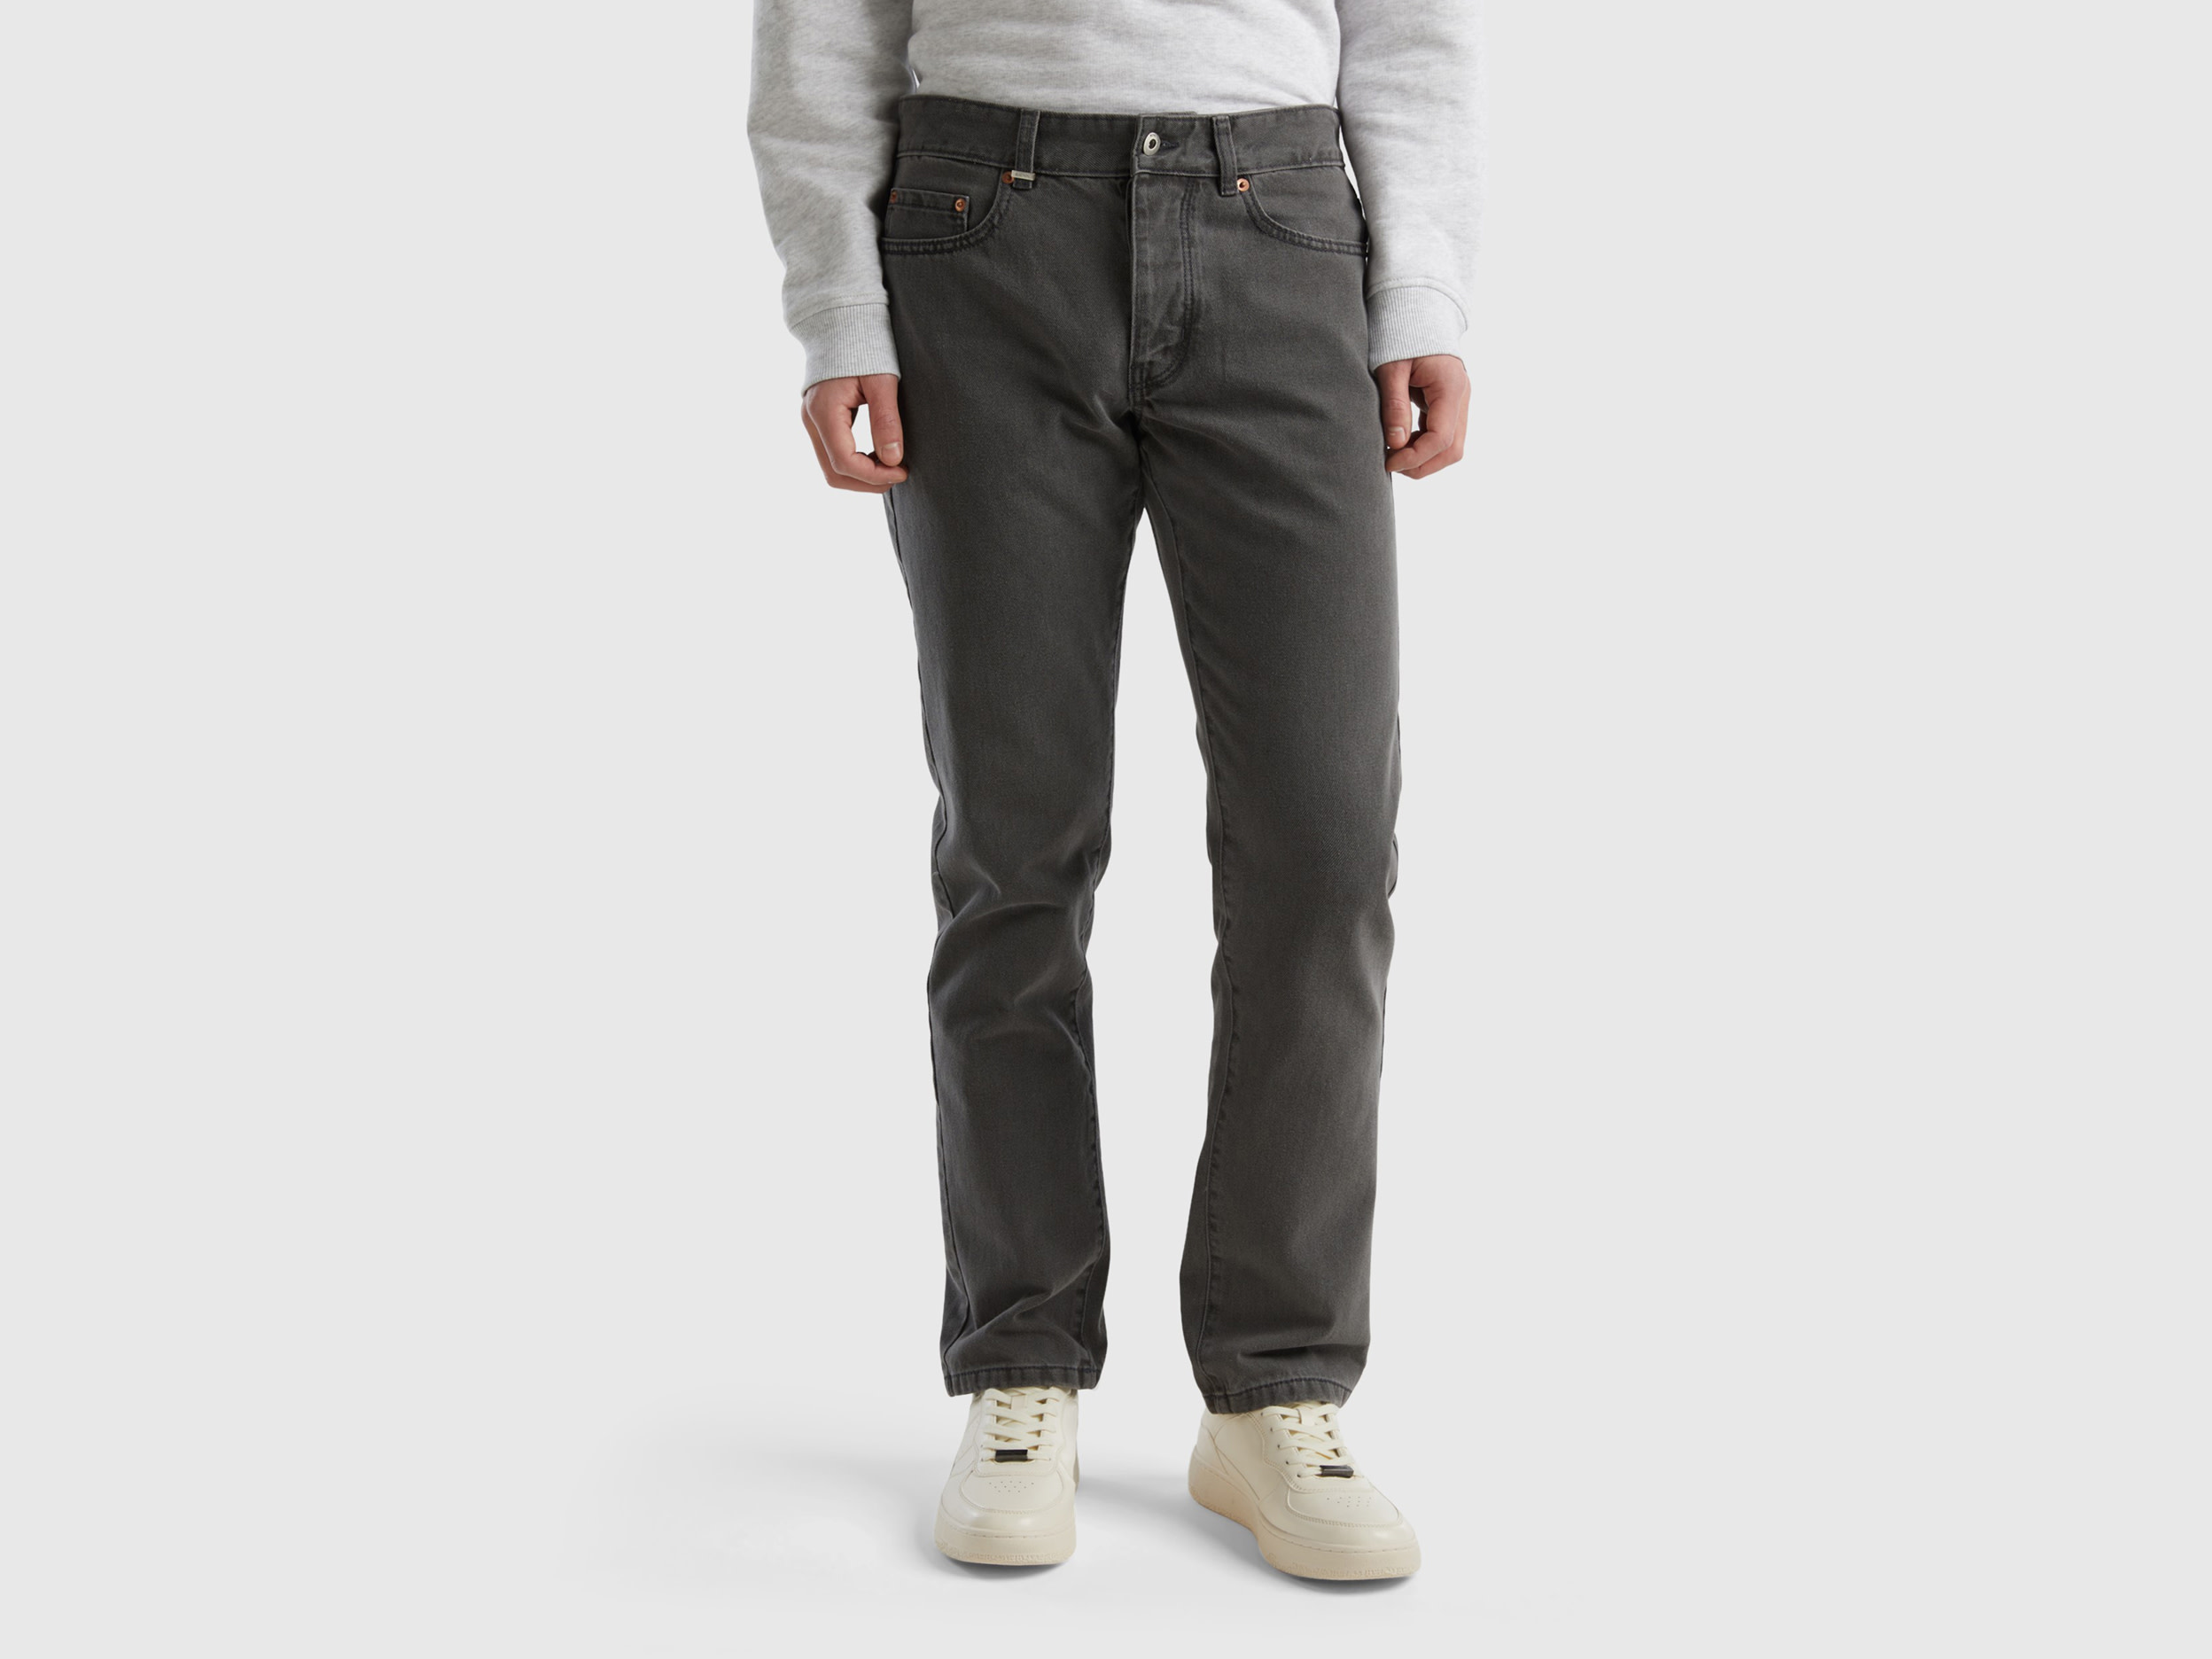 Benetton, Straight Fit Jeans, size 28, Dark Gray, Men